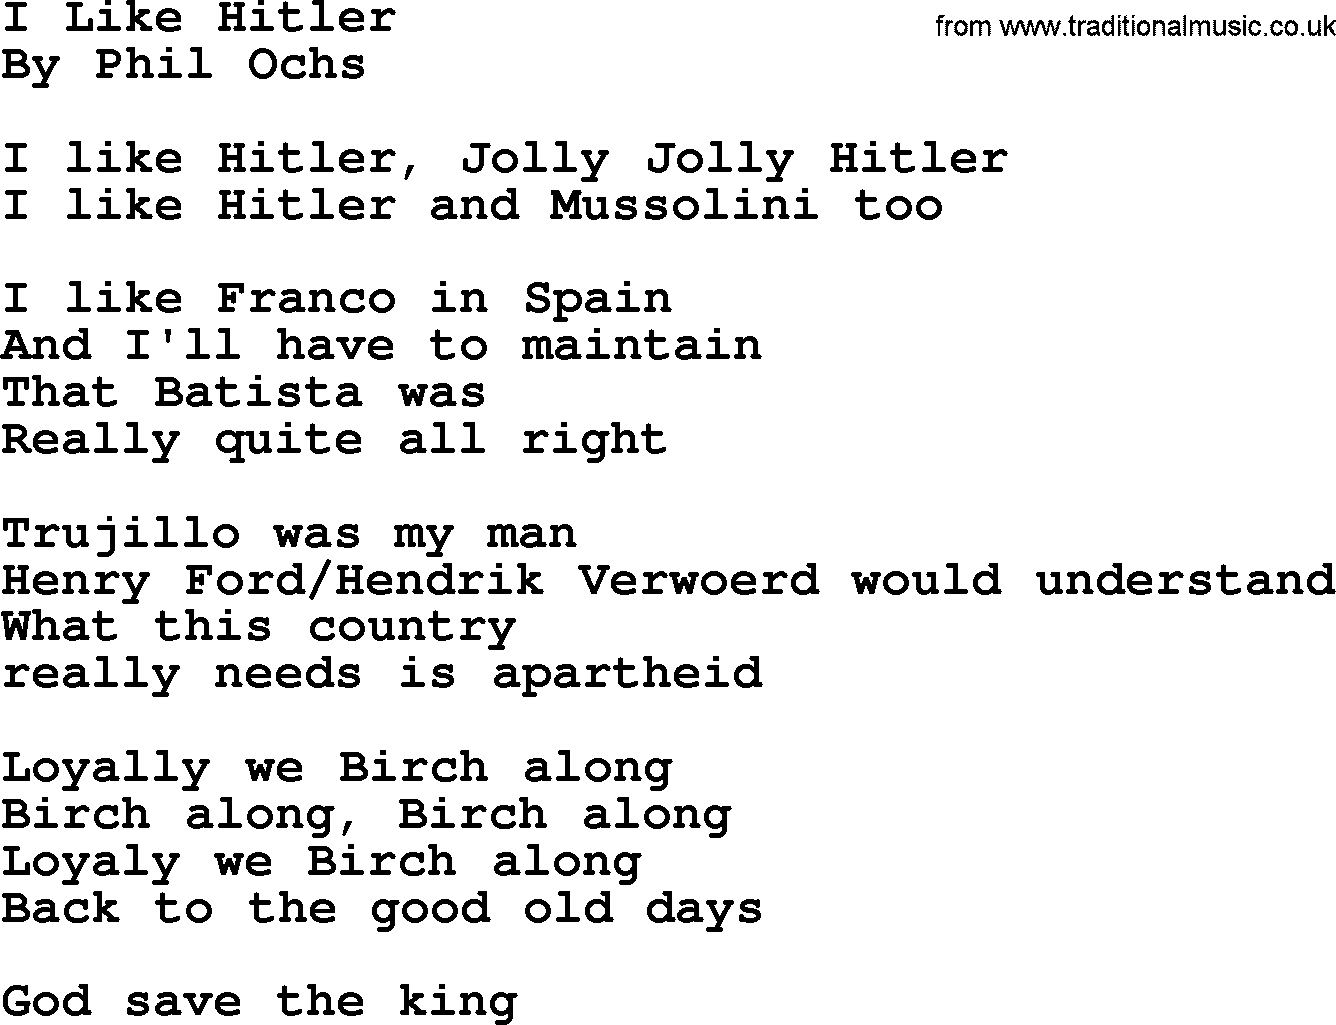 Phil Ochs song I Like Hitler, lyrics